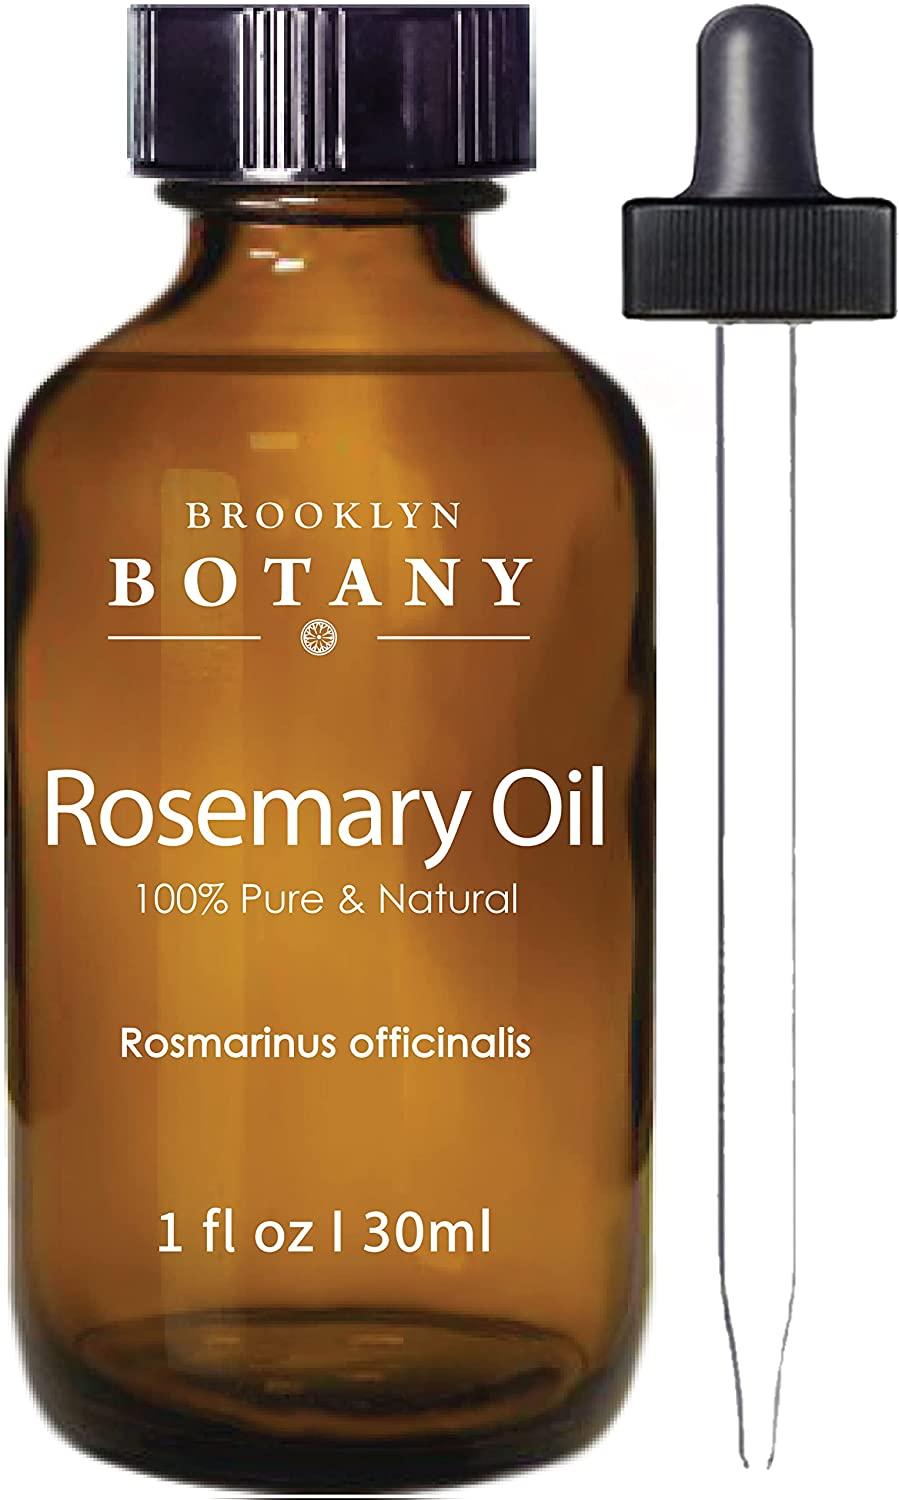 10 Best Rosemary Oils For Hair Growth Orlando Magazine 3177